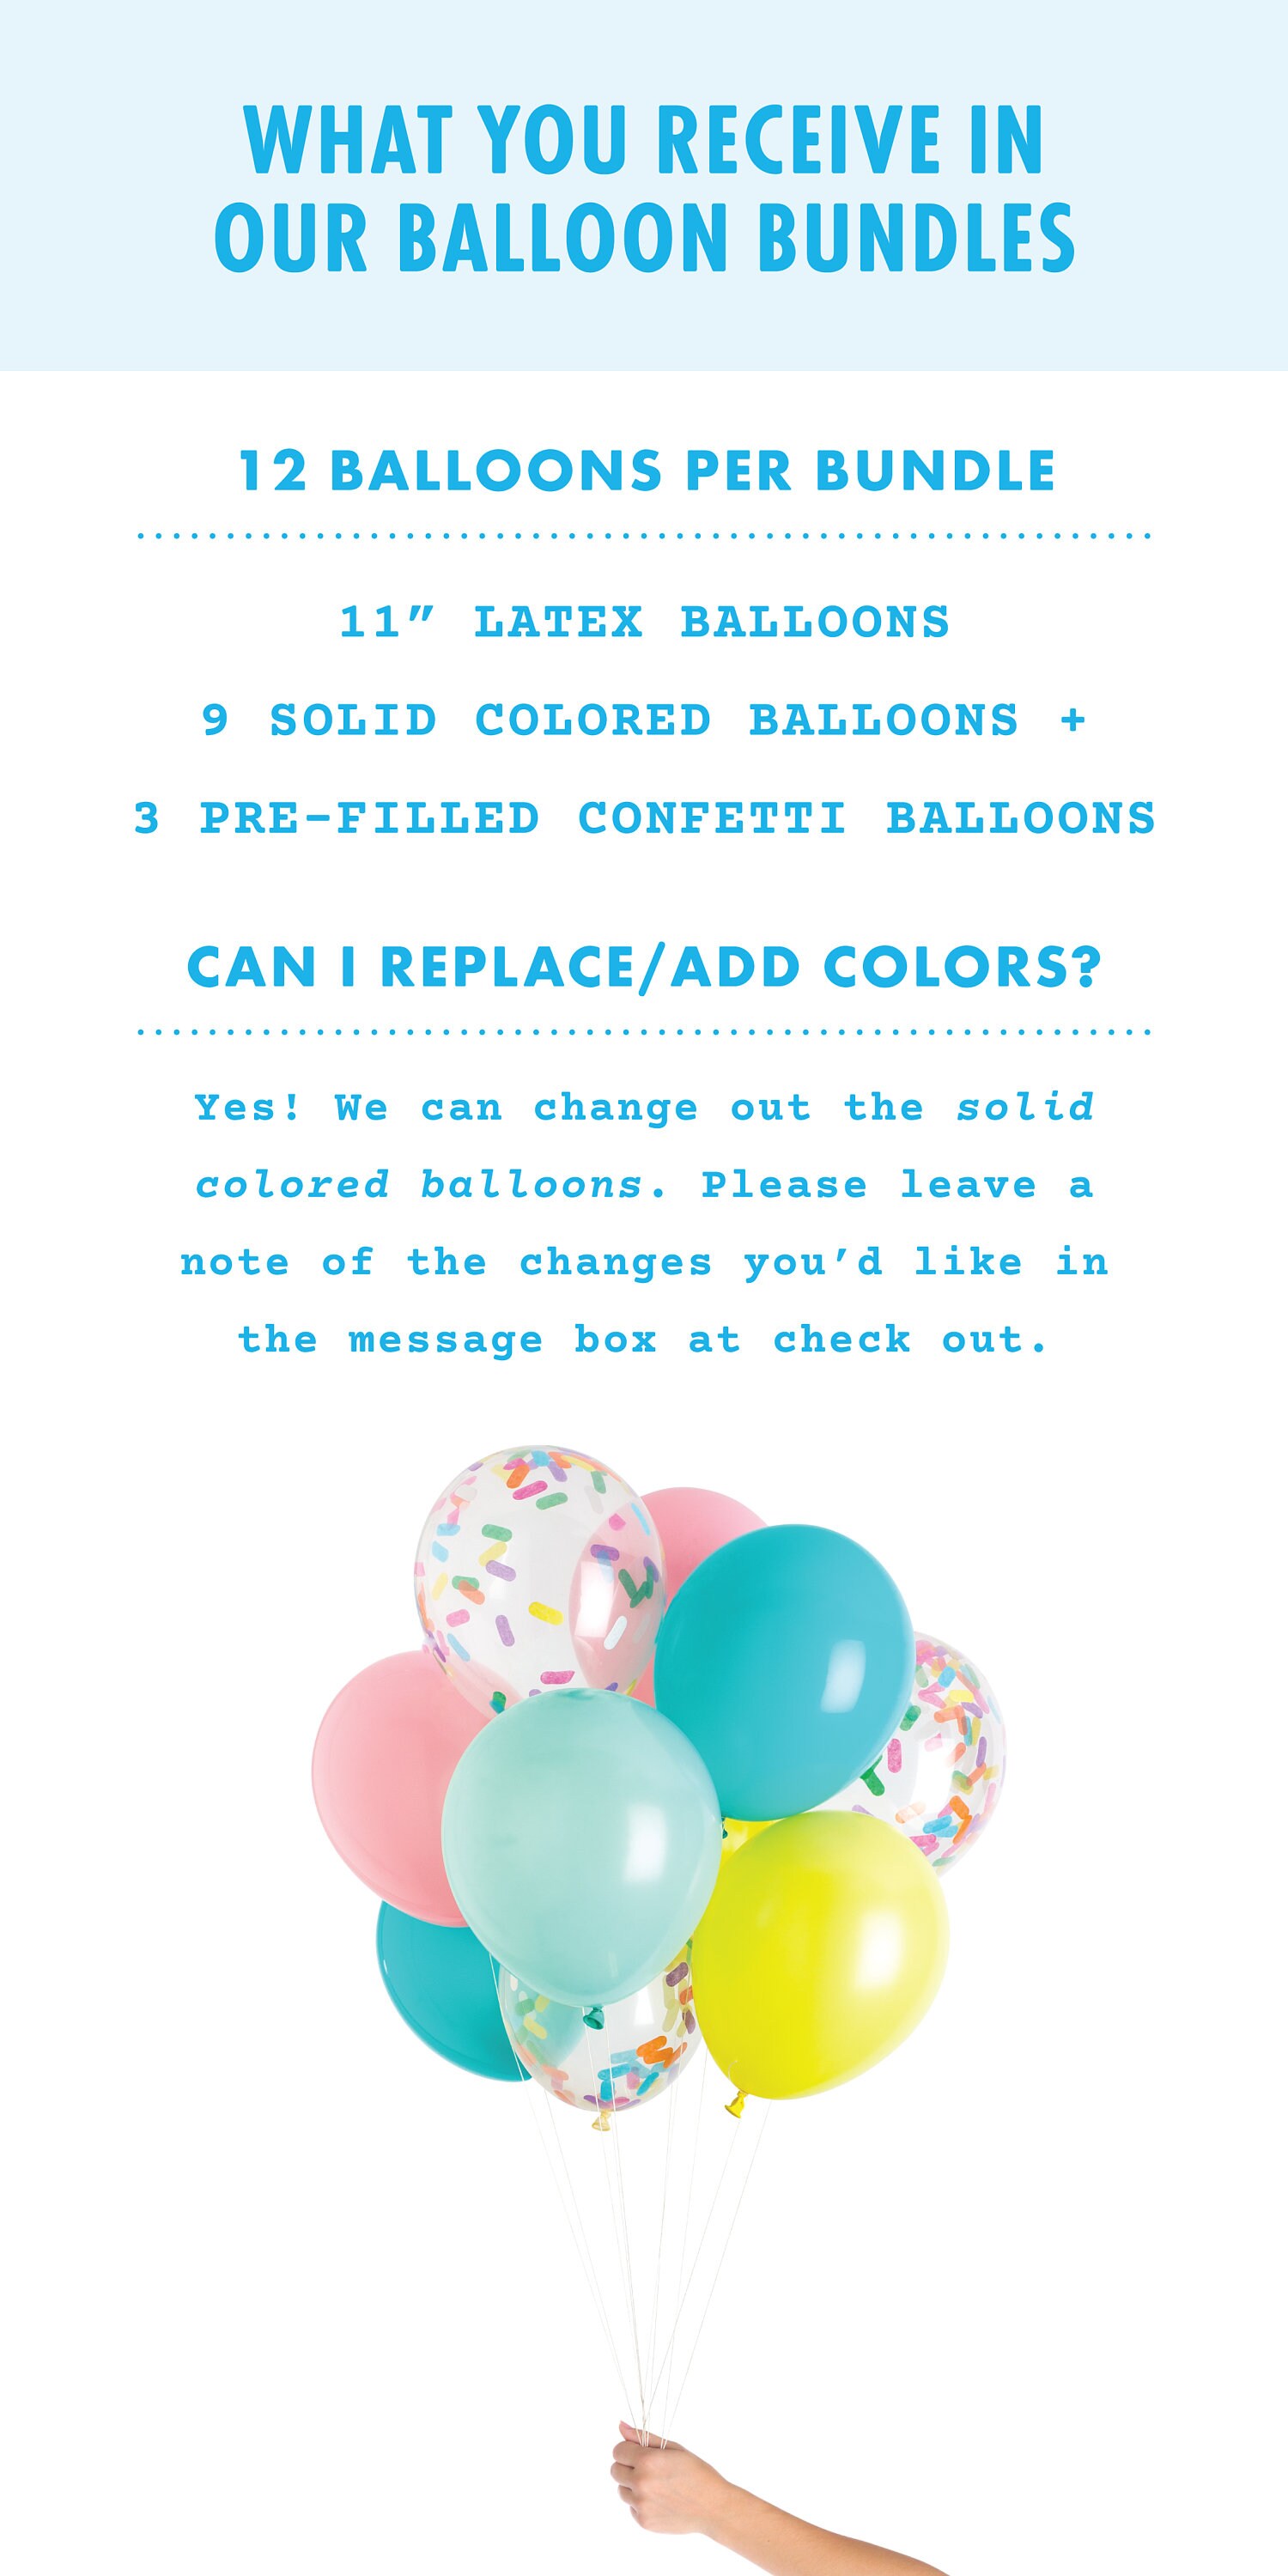 Cupcake Classic Balloons